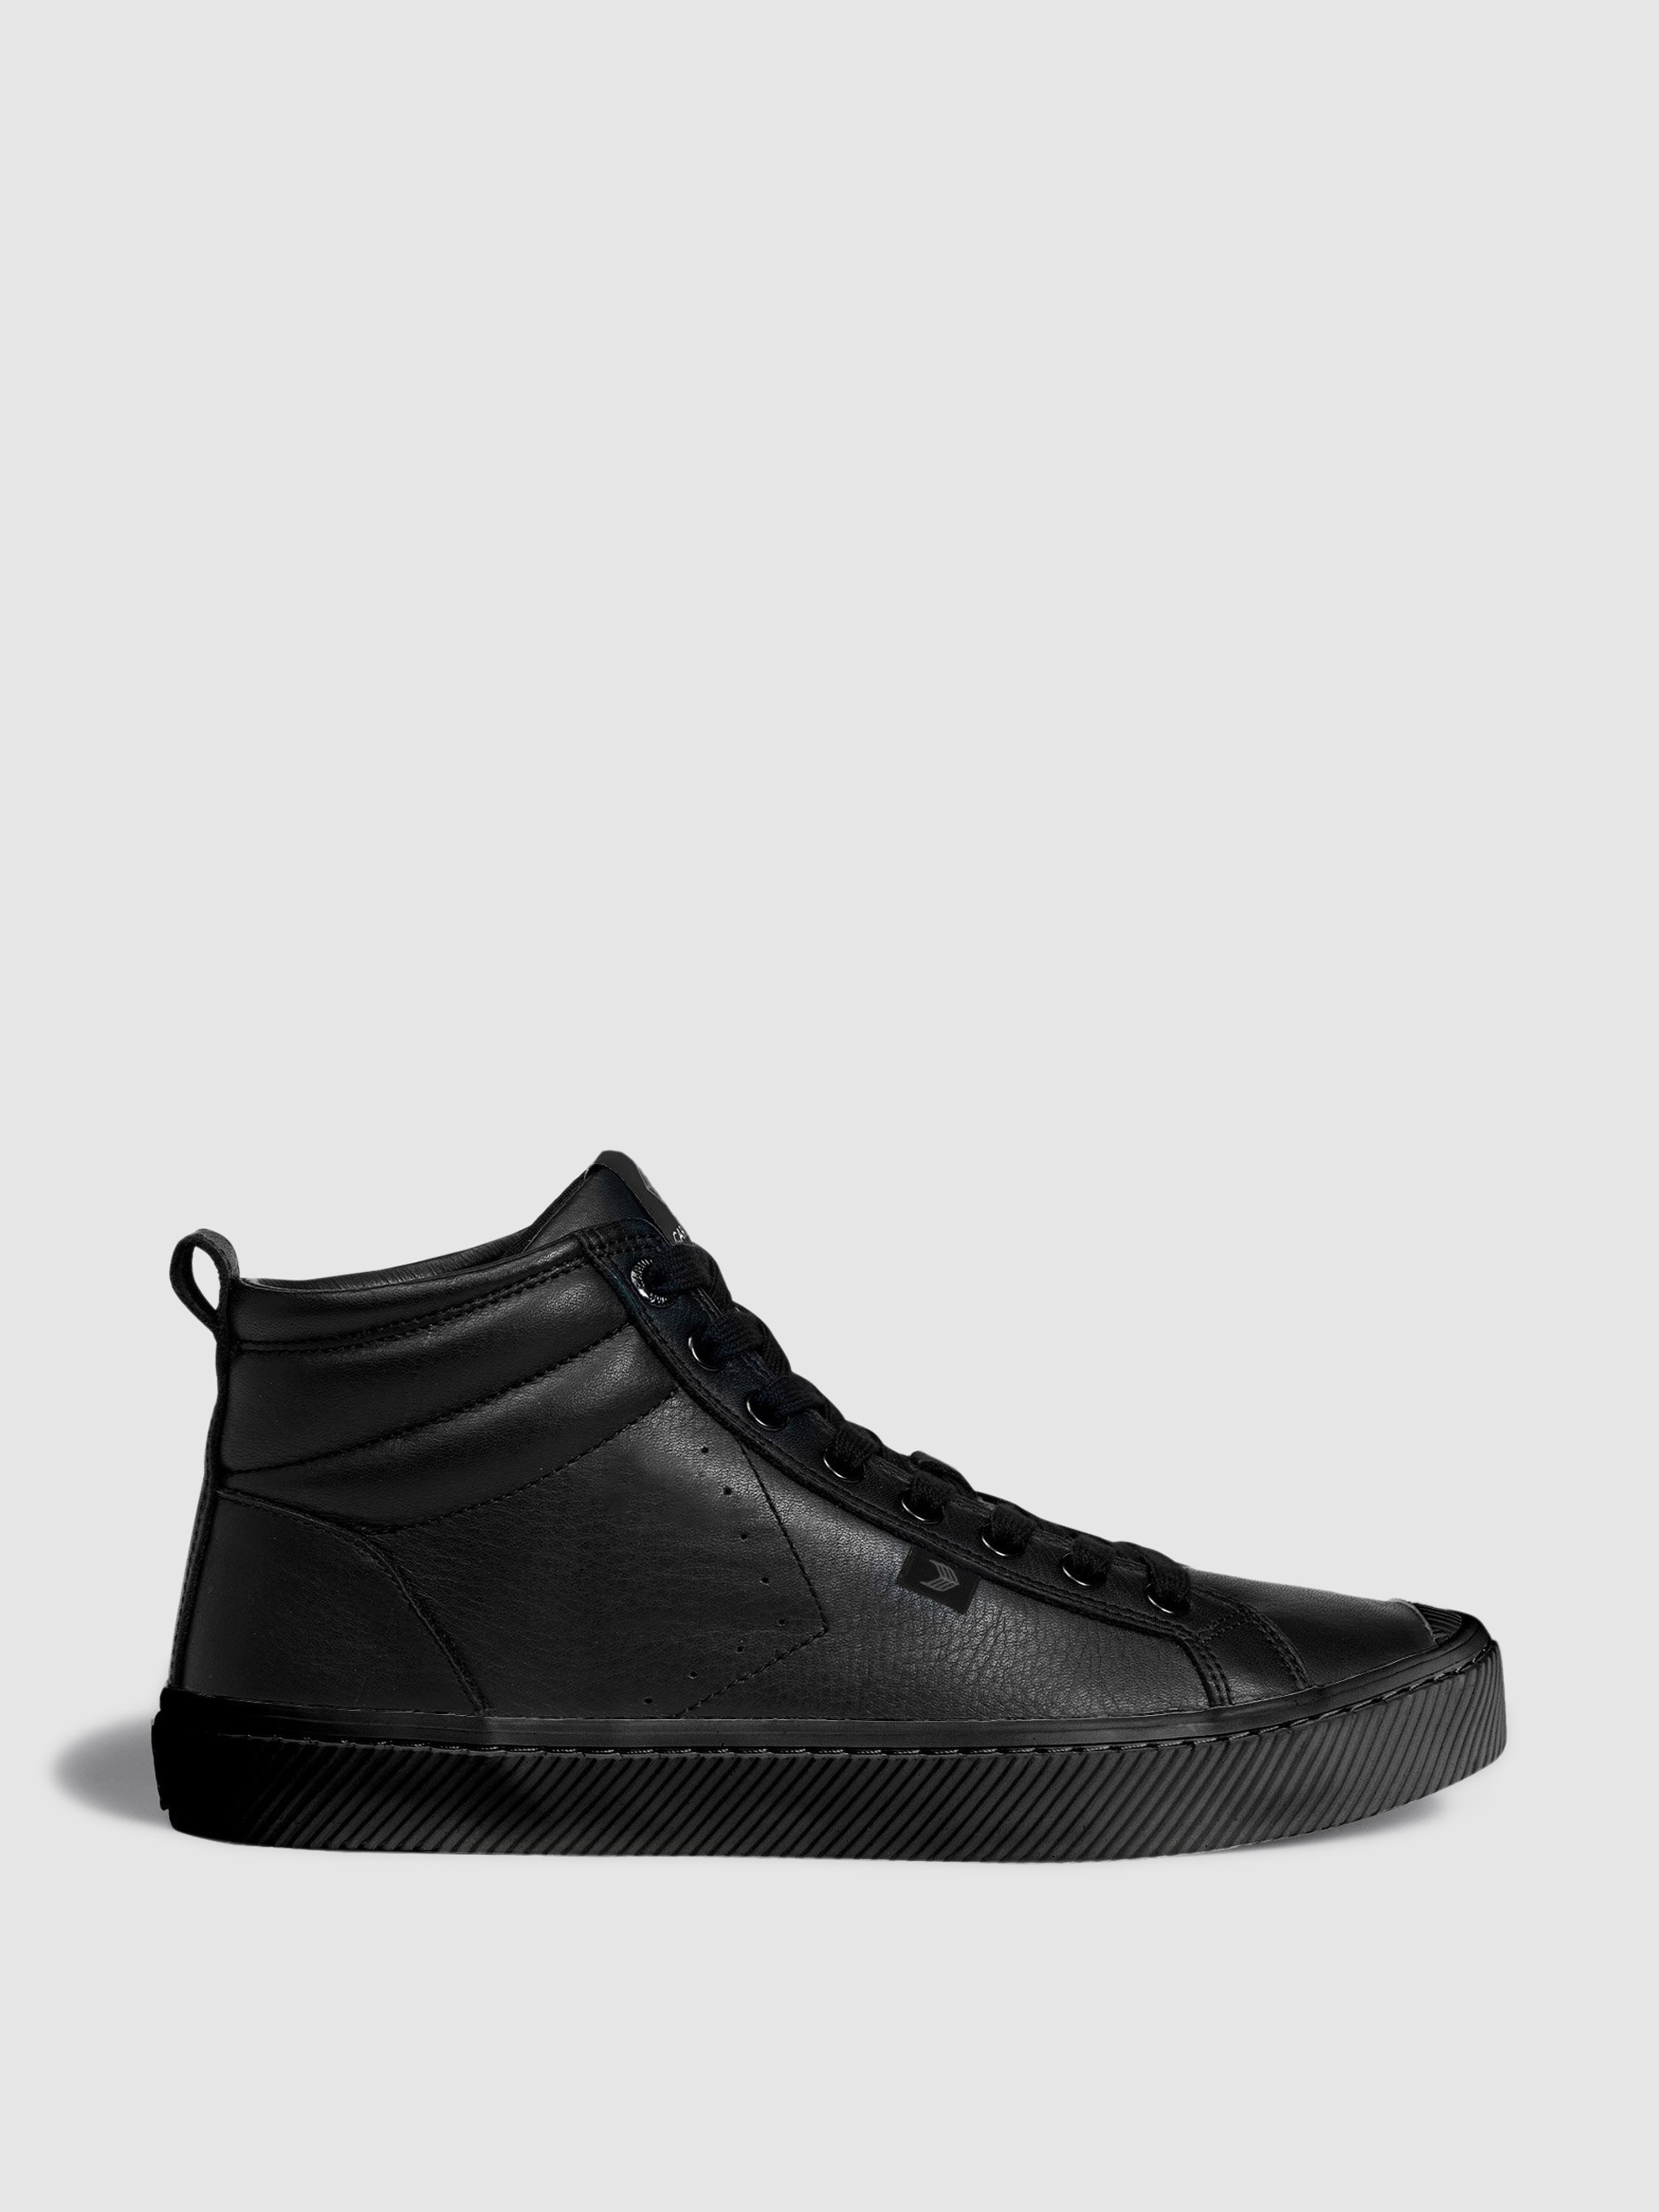 Cariuma Oca High All Black Premium Leather Sneaker Women